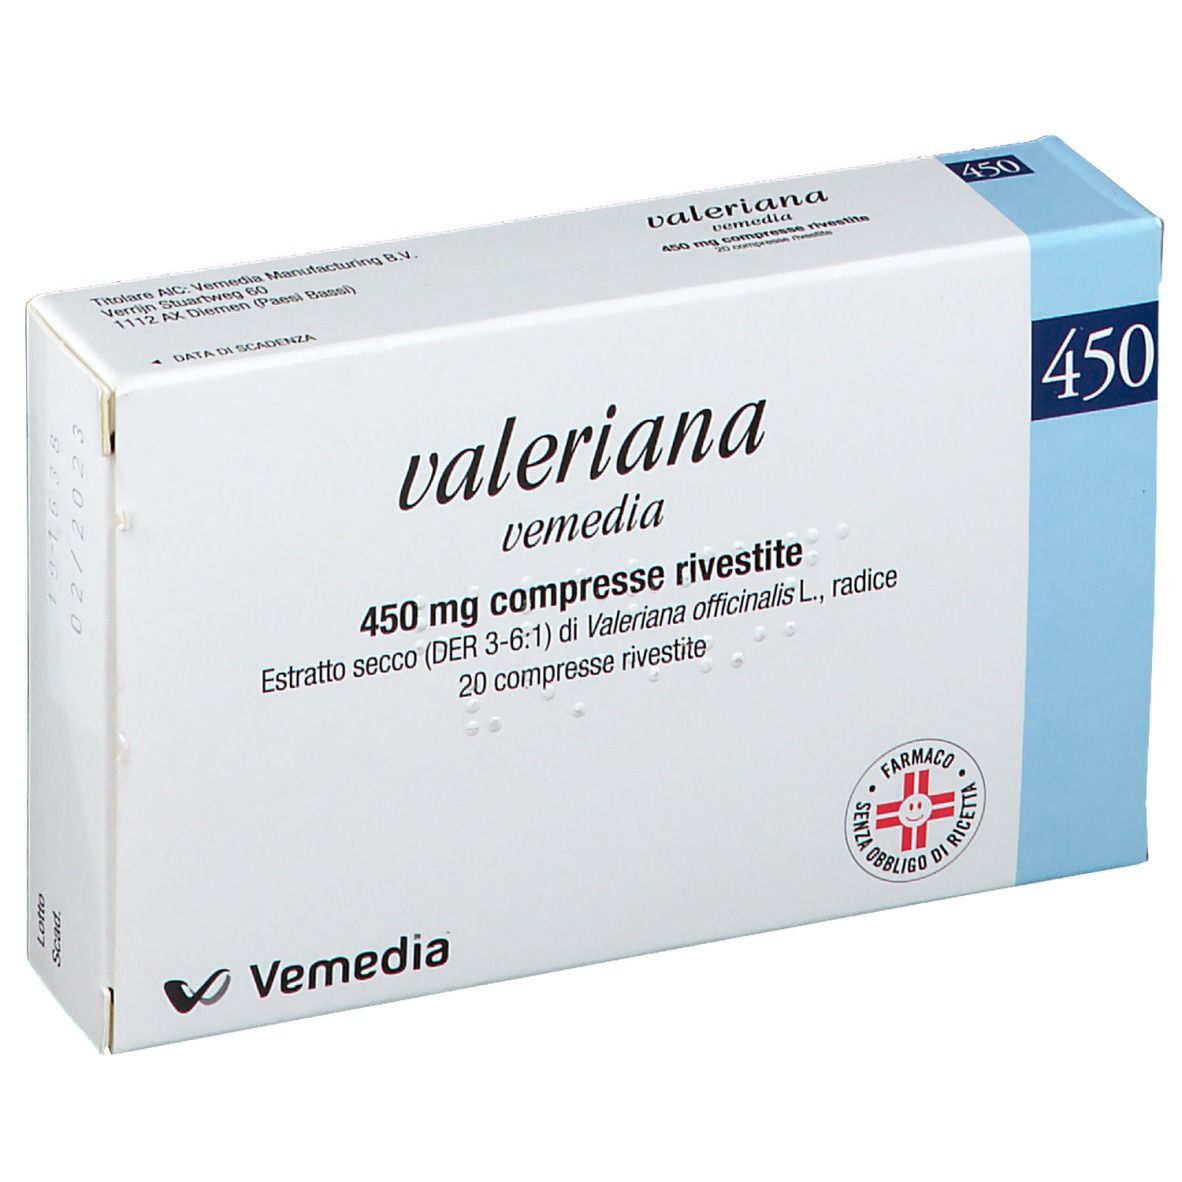 VALERIANA VEMEDIA 20 COMPRESSE RIVESTITE 450